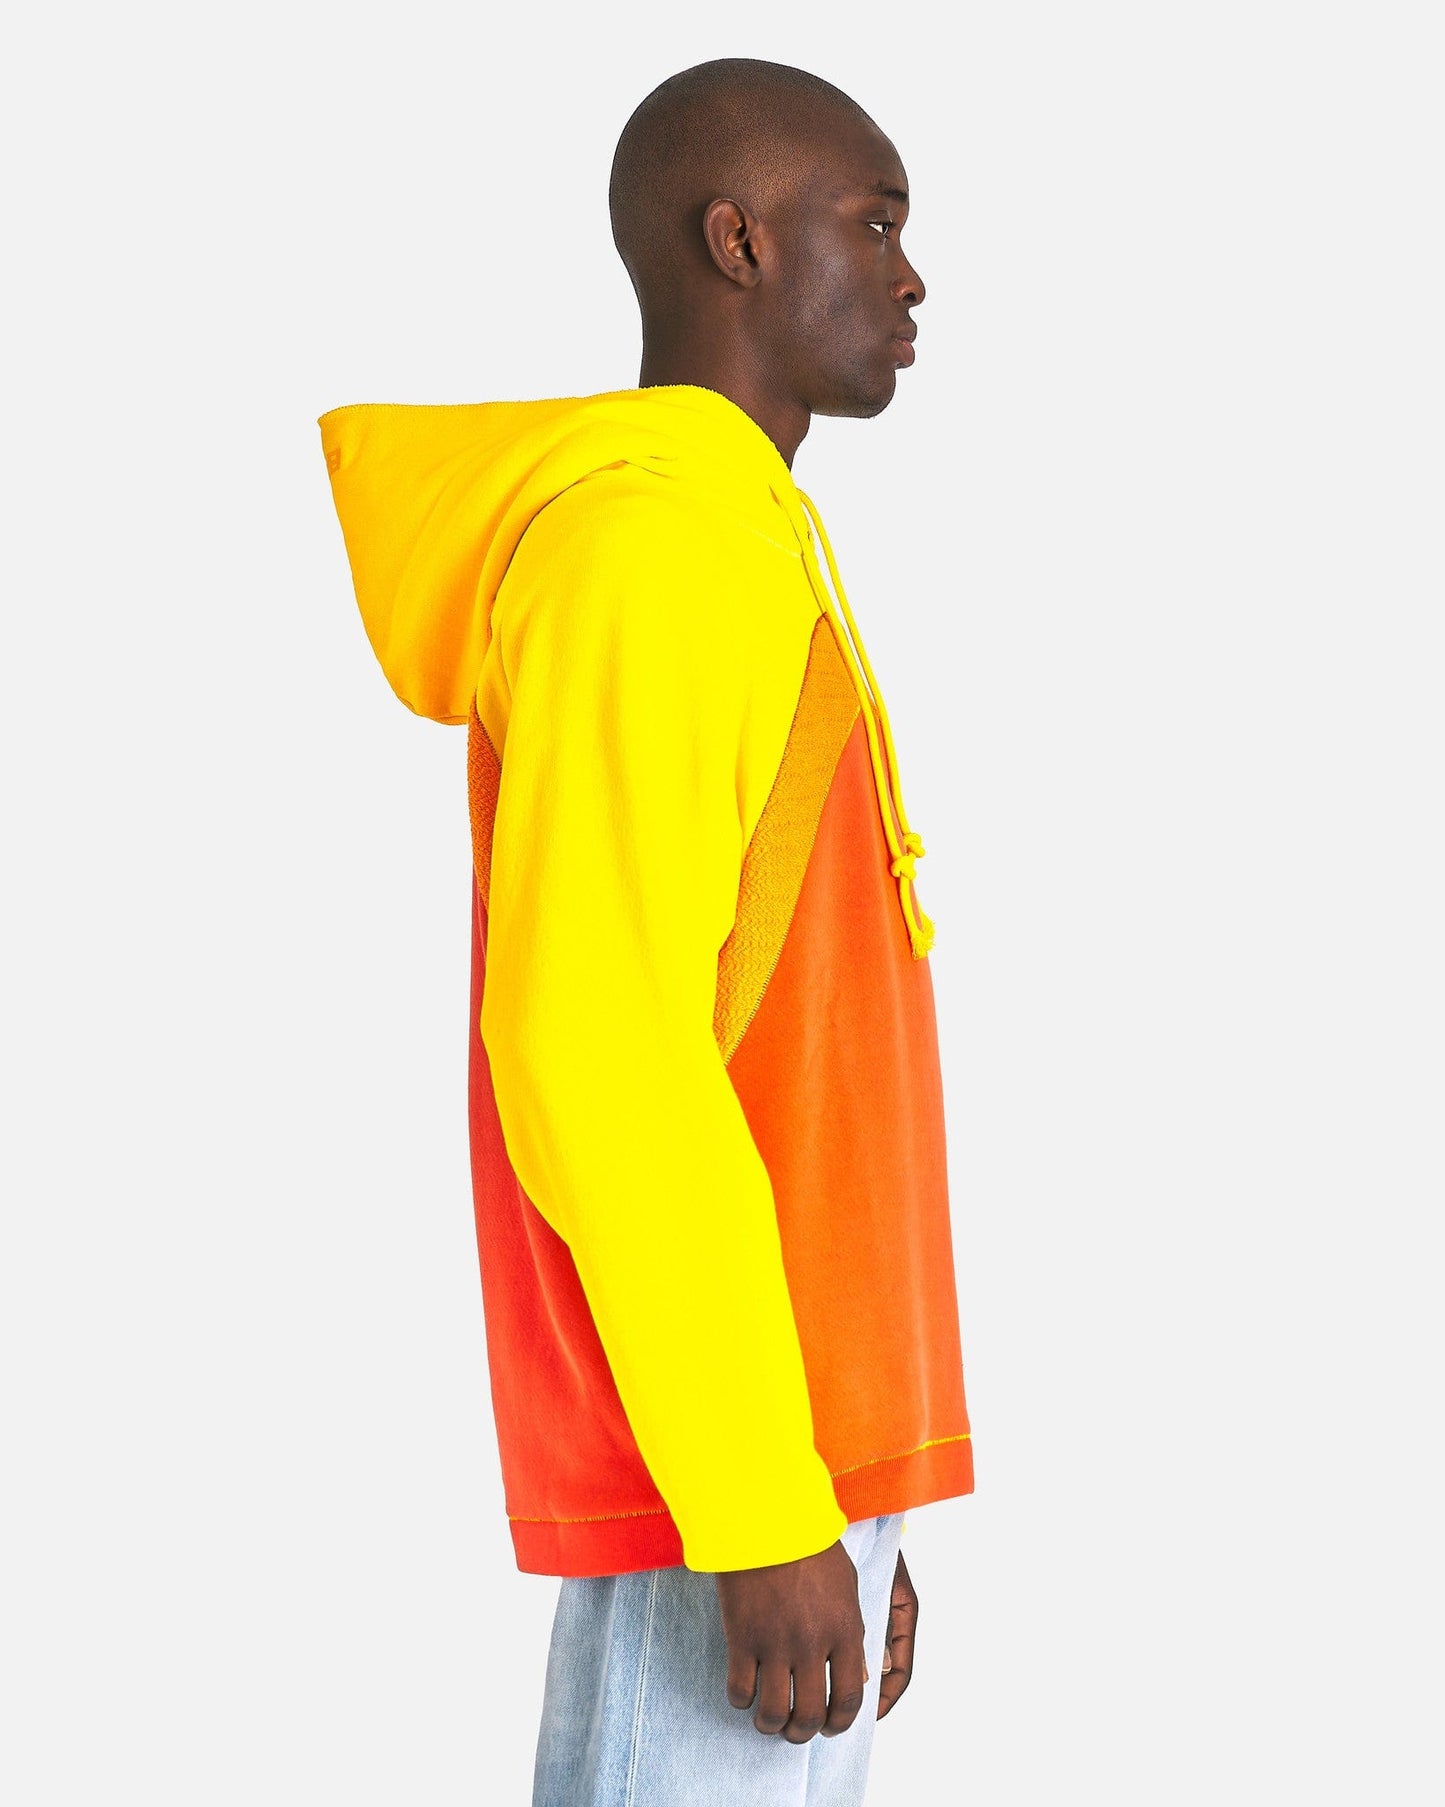 ERL Men's Sweatshirts Rainbow Knit Hoodie in Orange